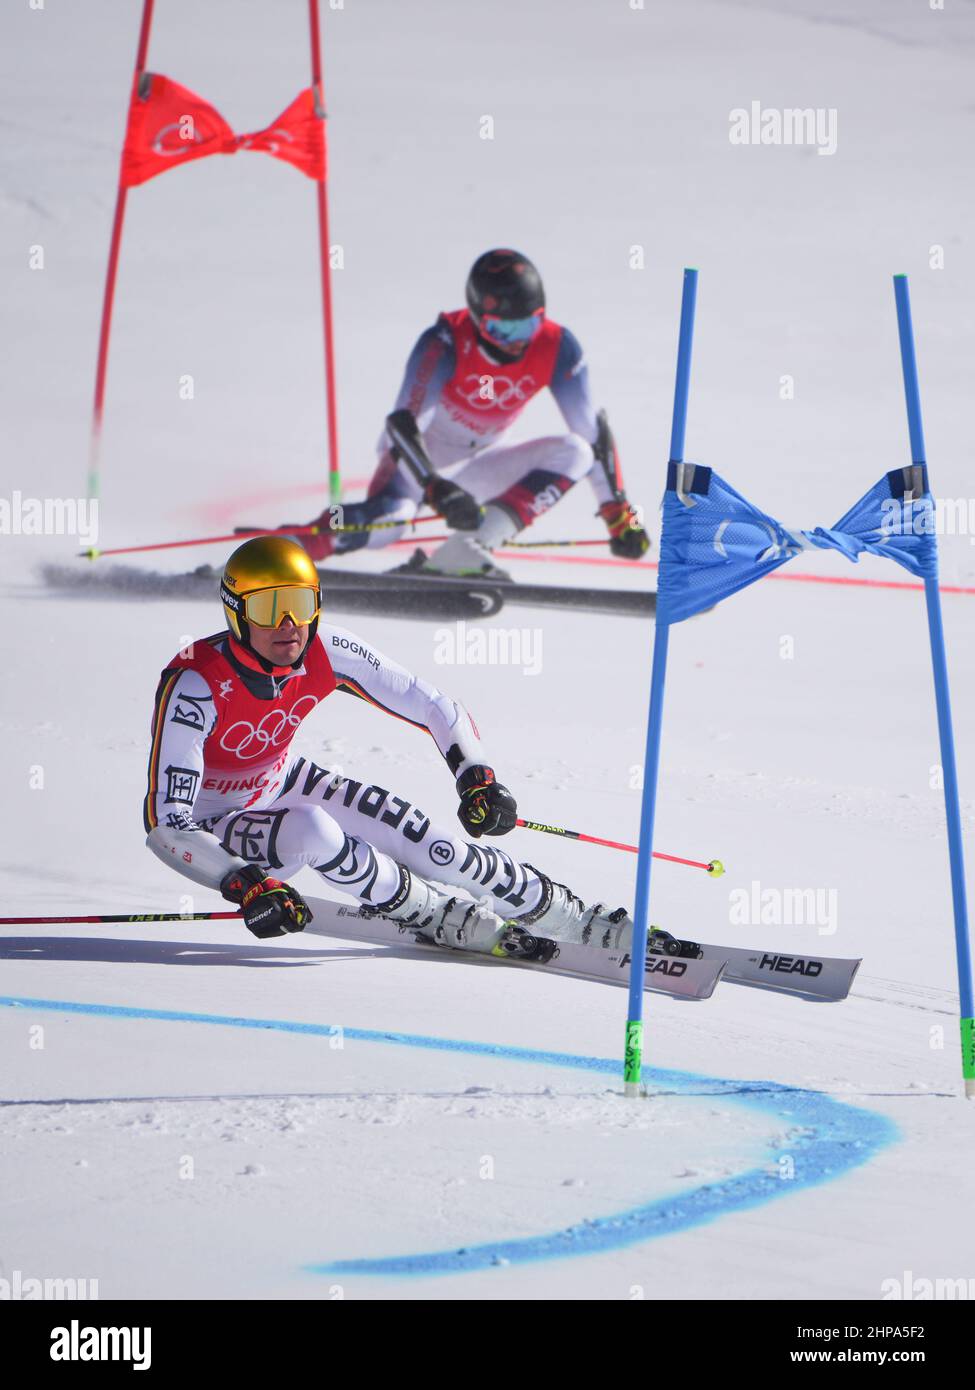 Usa alpine ski team hi-res stock photography and images - Alamy